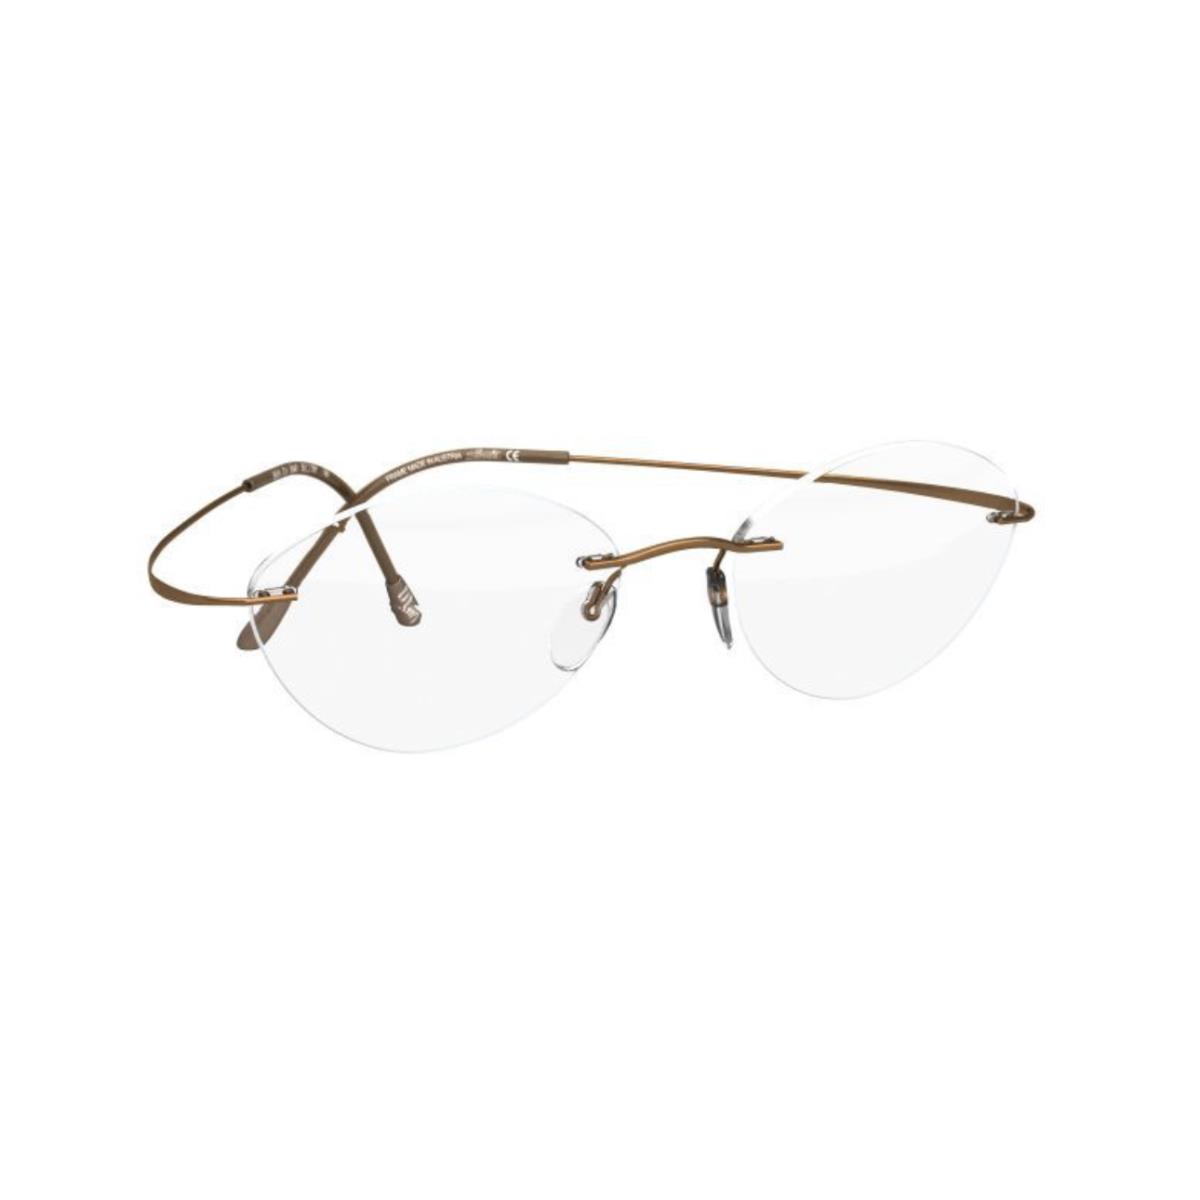 Silhouette Rimless Eyeglasses Titan Minimal Art The Must Collection Frames MATTE GOLD - 8540, SIZE: 50-19 140, SHAPE - CV